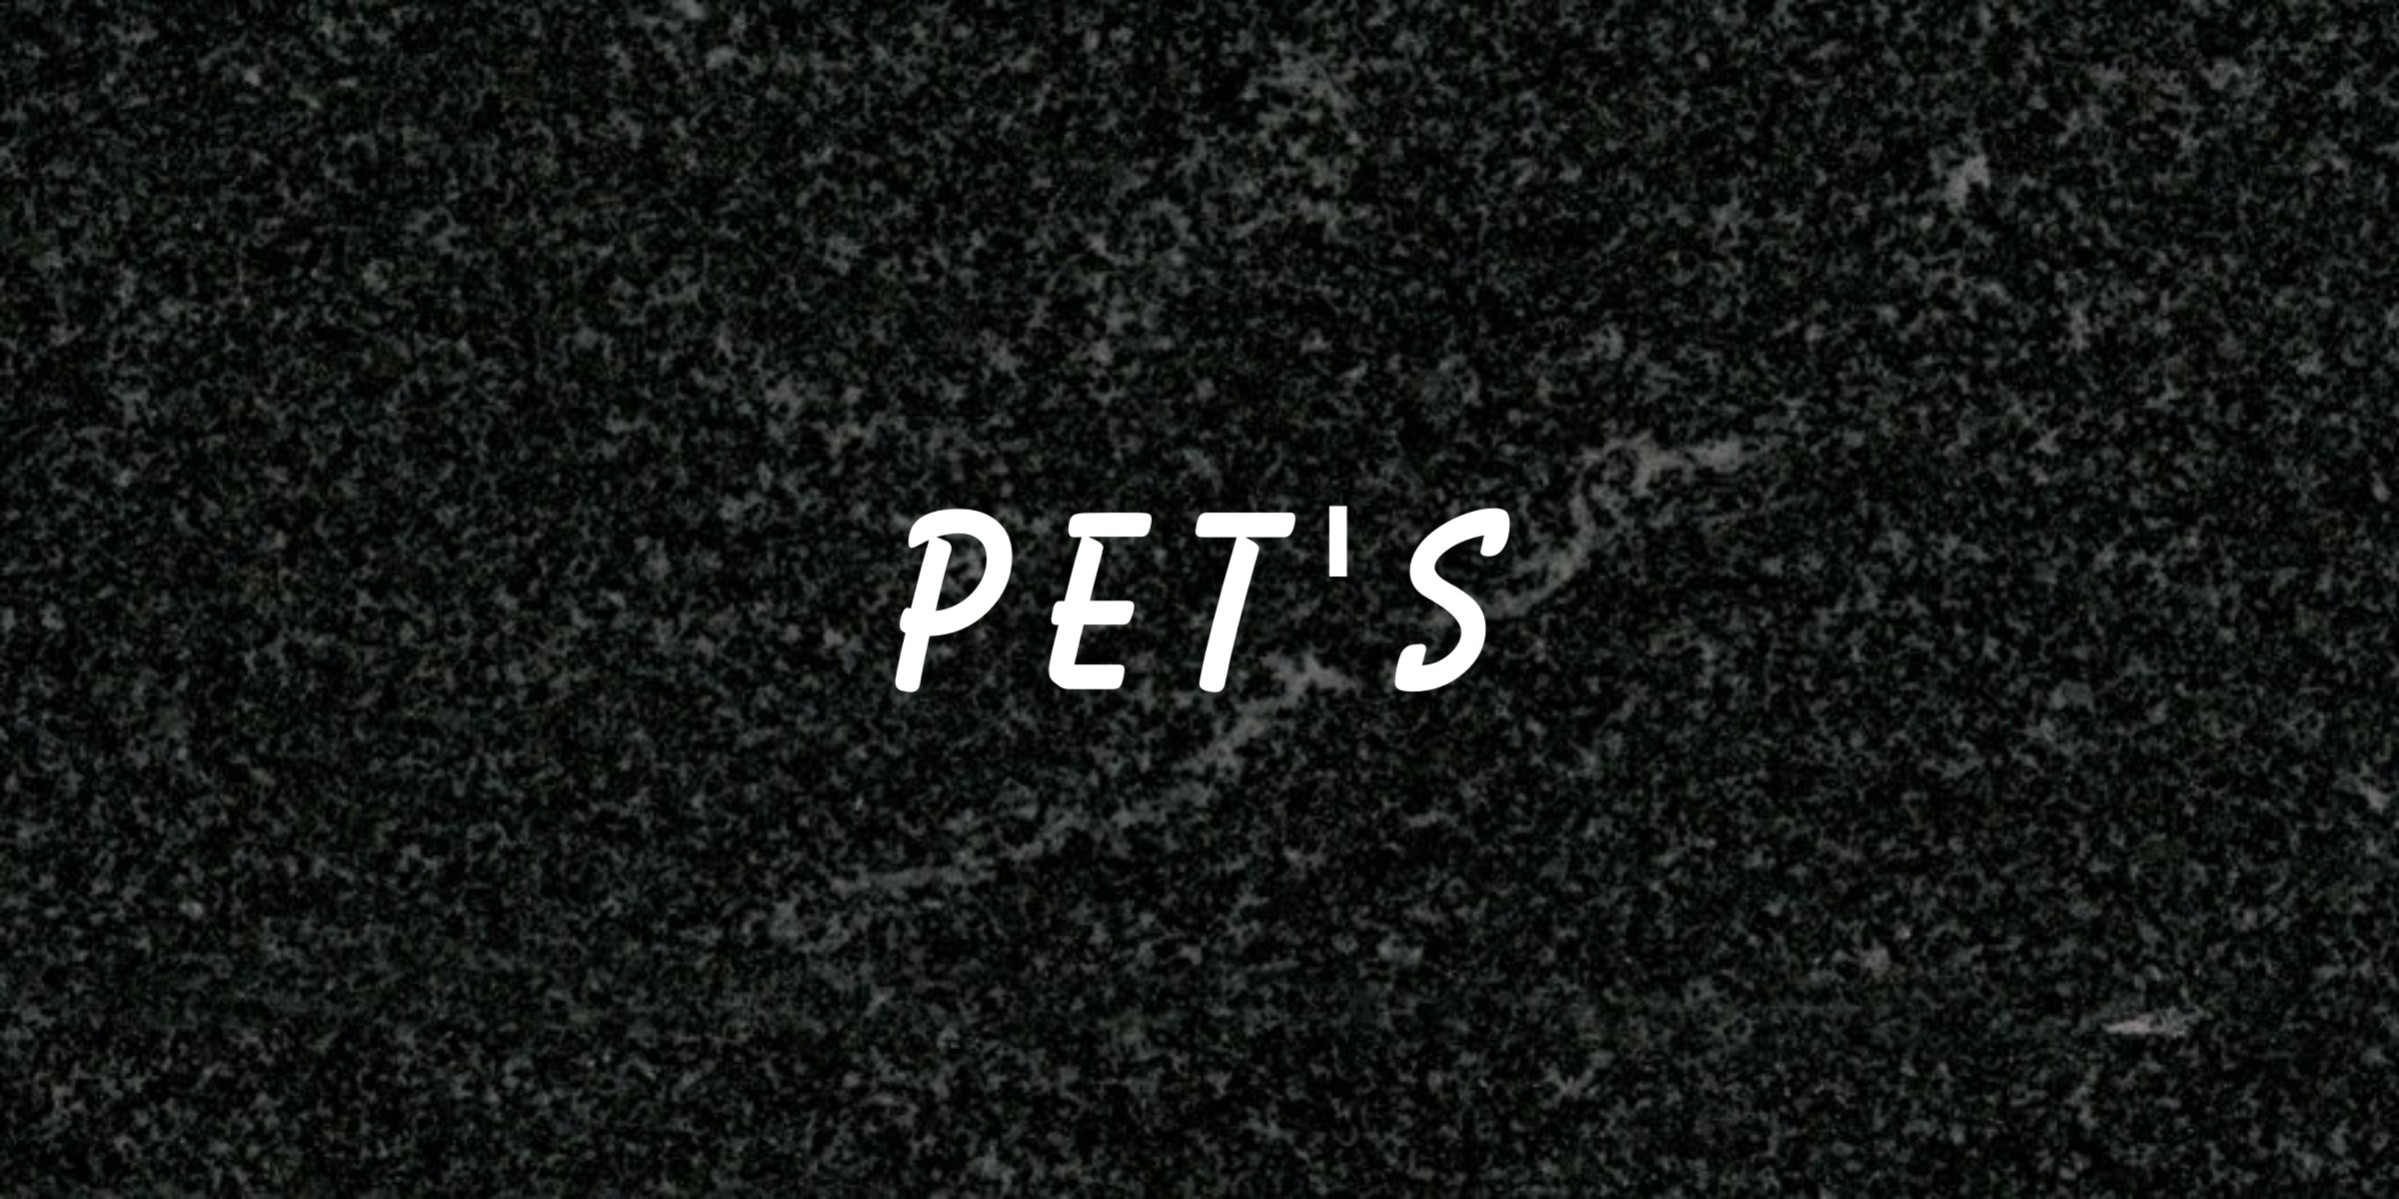 pets